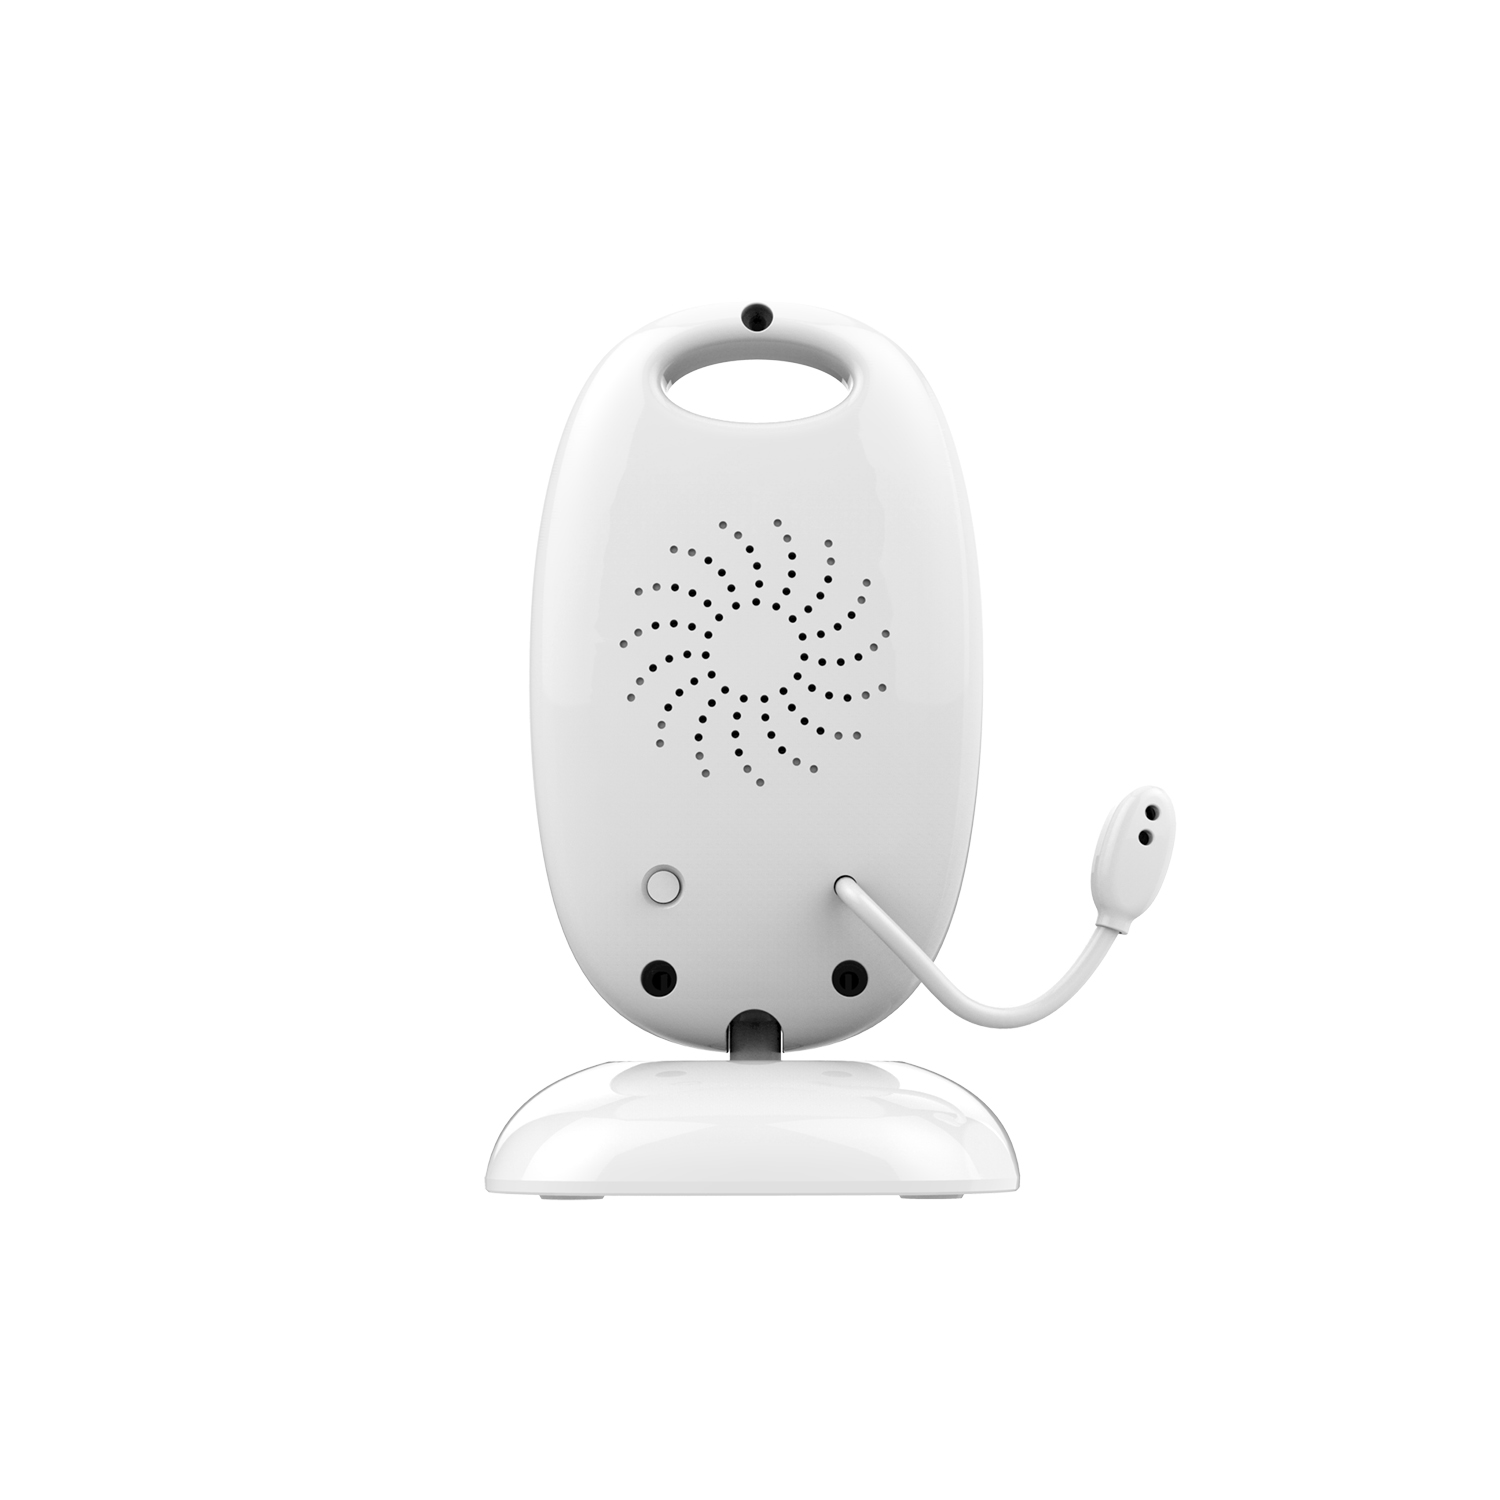 FOXSPORT Baby Monitor Babyphone